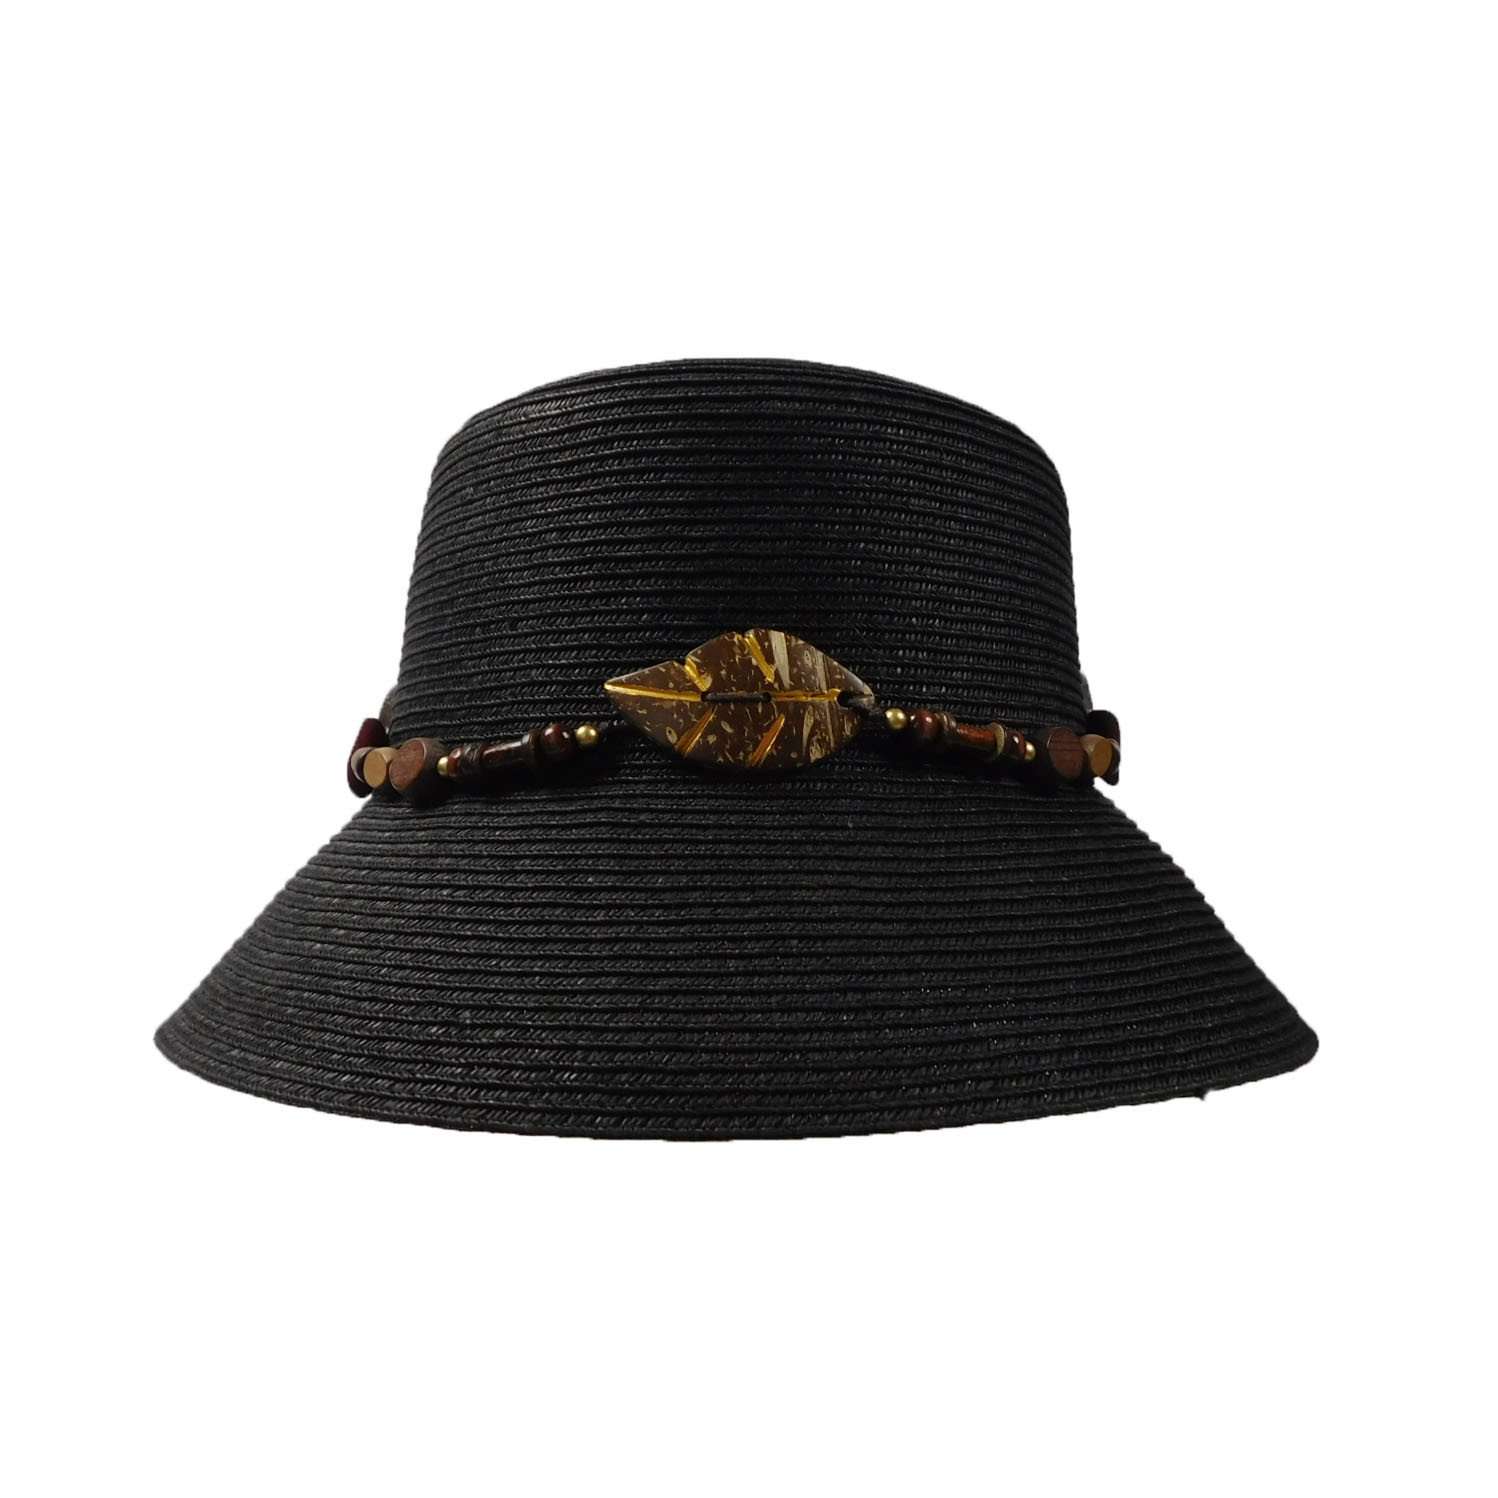 Black Summer Hat with Wood Beads Wide Brim Hat Great hats by Karen Keith WSPS604BK Black M/L (57 - 58 cm) 